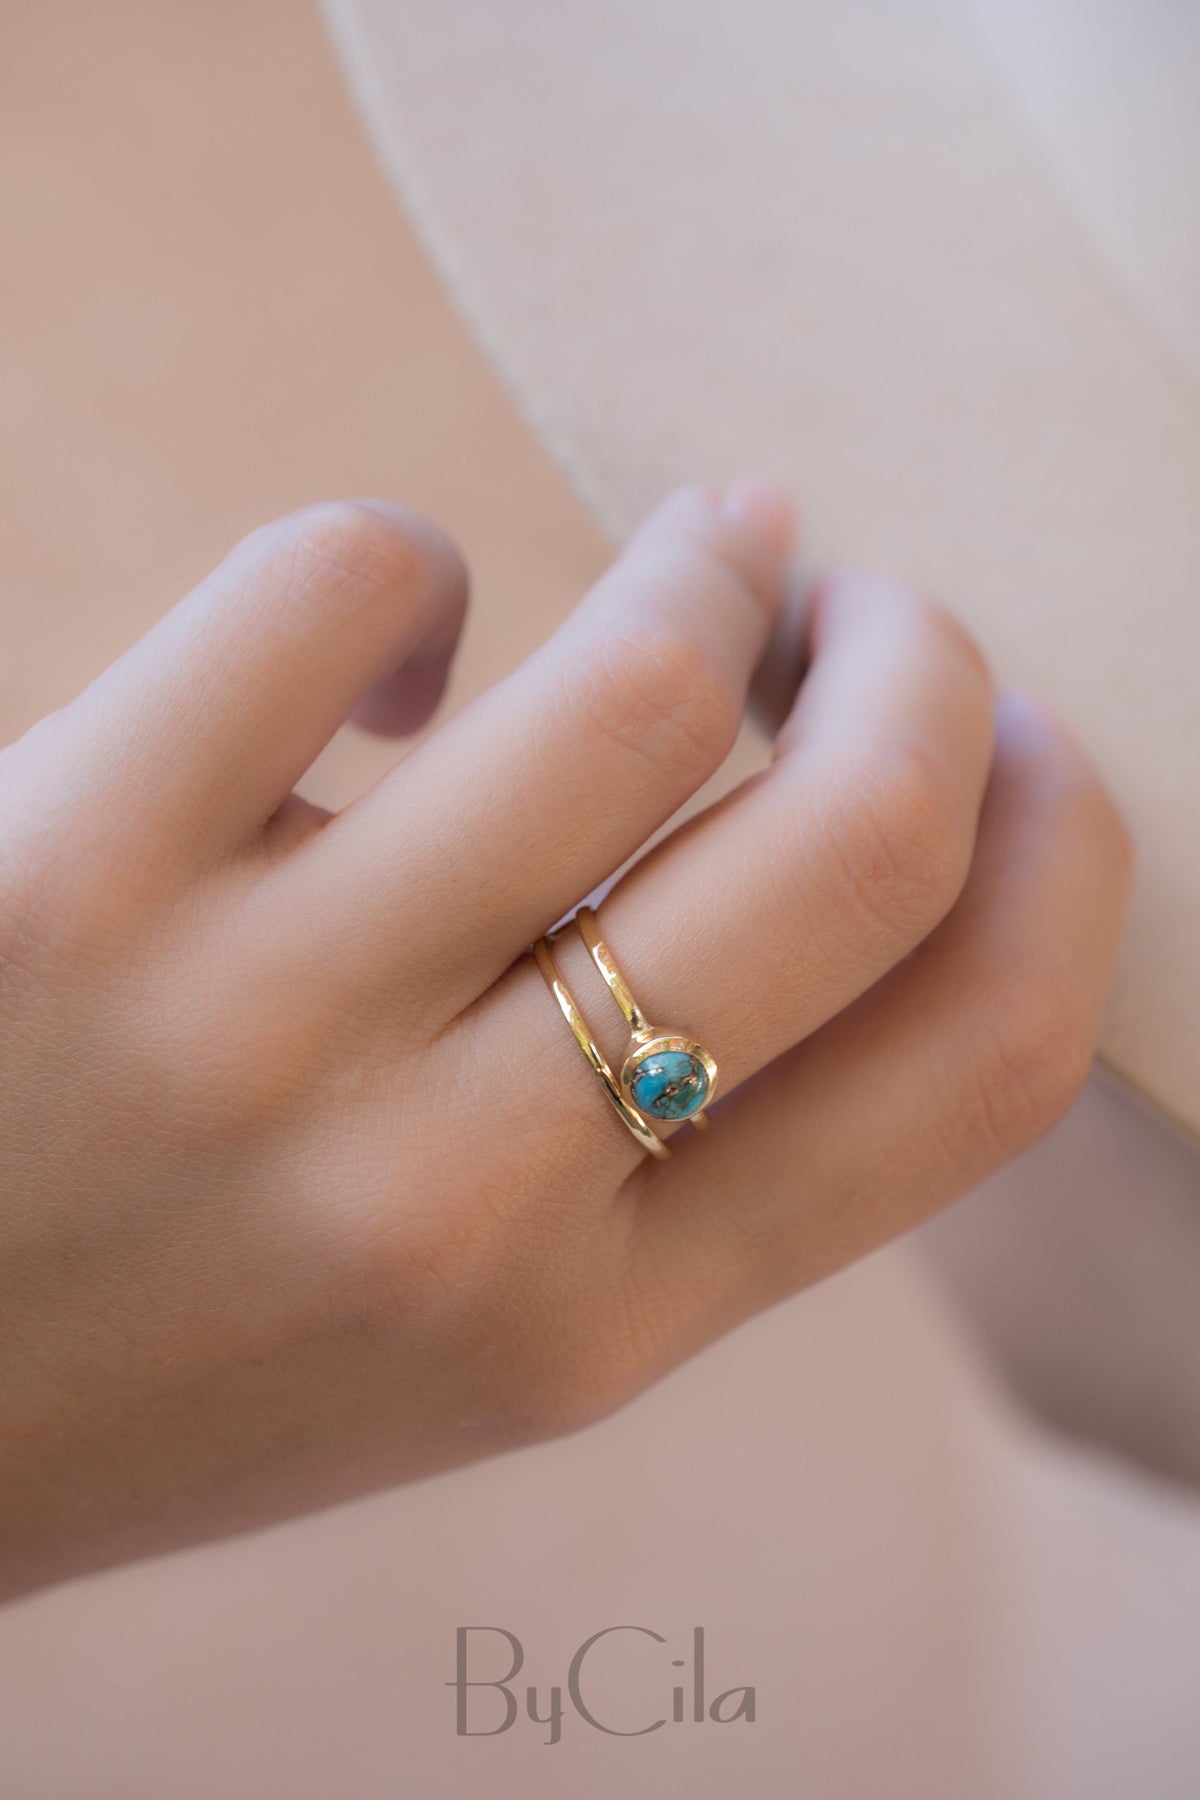 Copper Turquoise Ring * Gold Vermeil Ring * Gemstone Ring * Turquoise Ring * Blue * Handmade * Modern * Boho * Gold Ring * Hippie BJR103